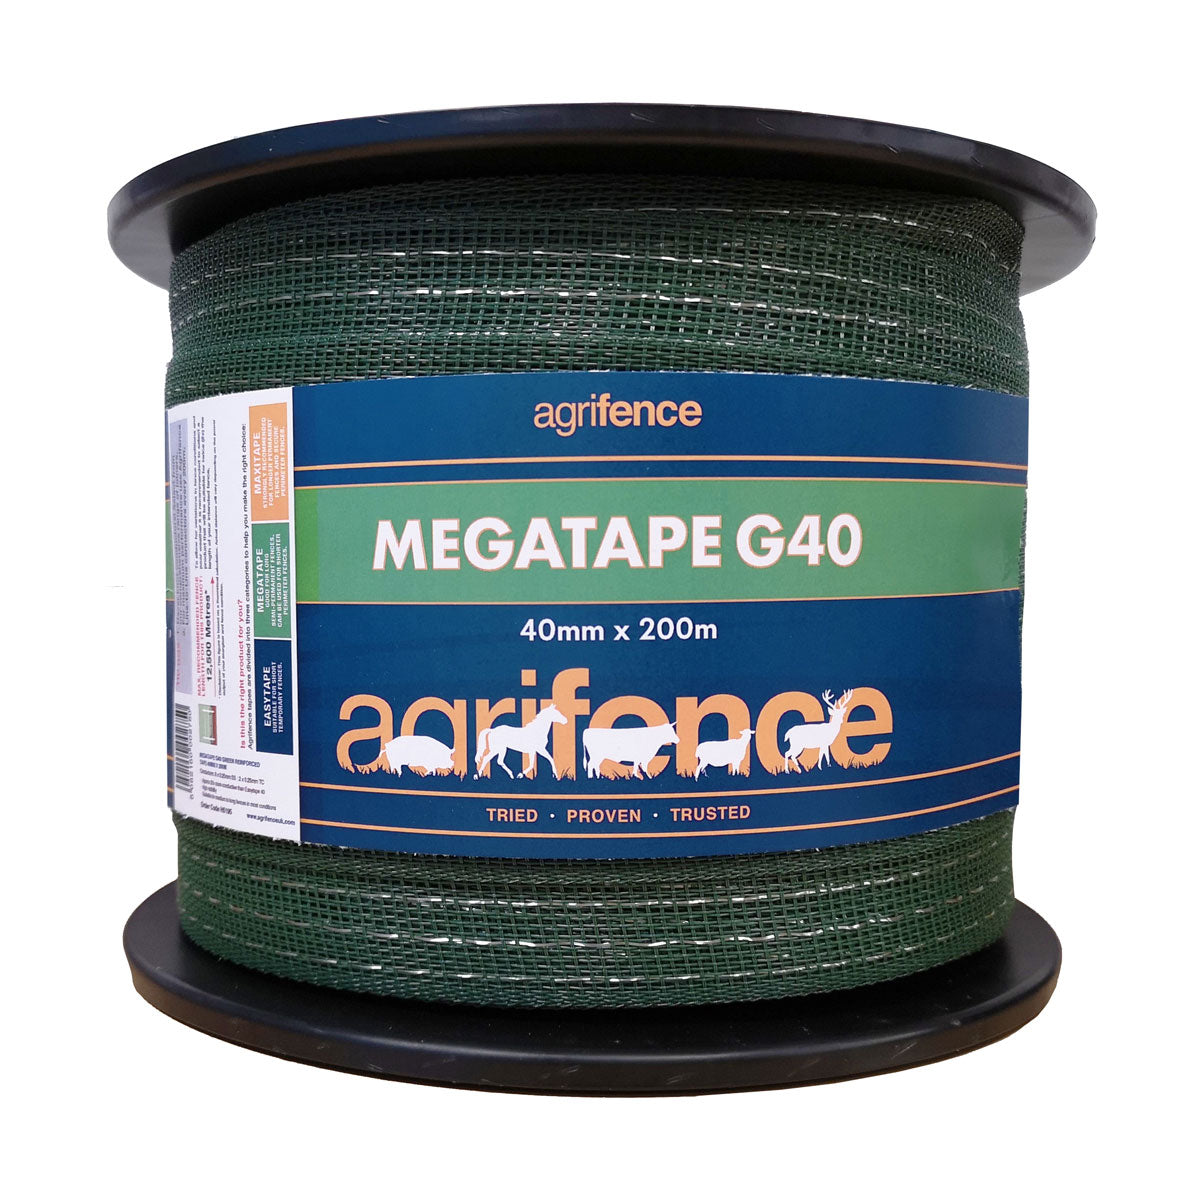 Agrifence Megatape G40 Reinforced Tape